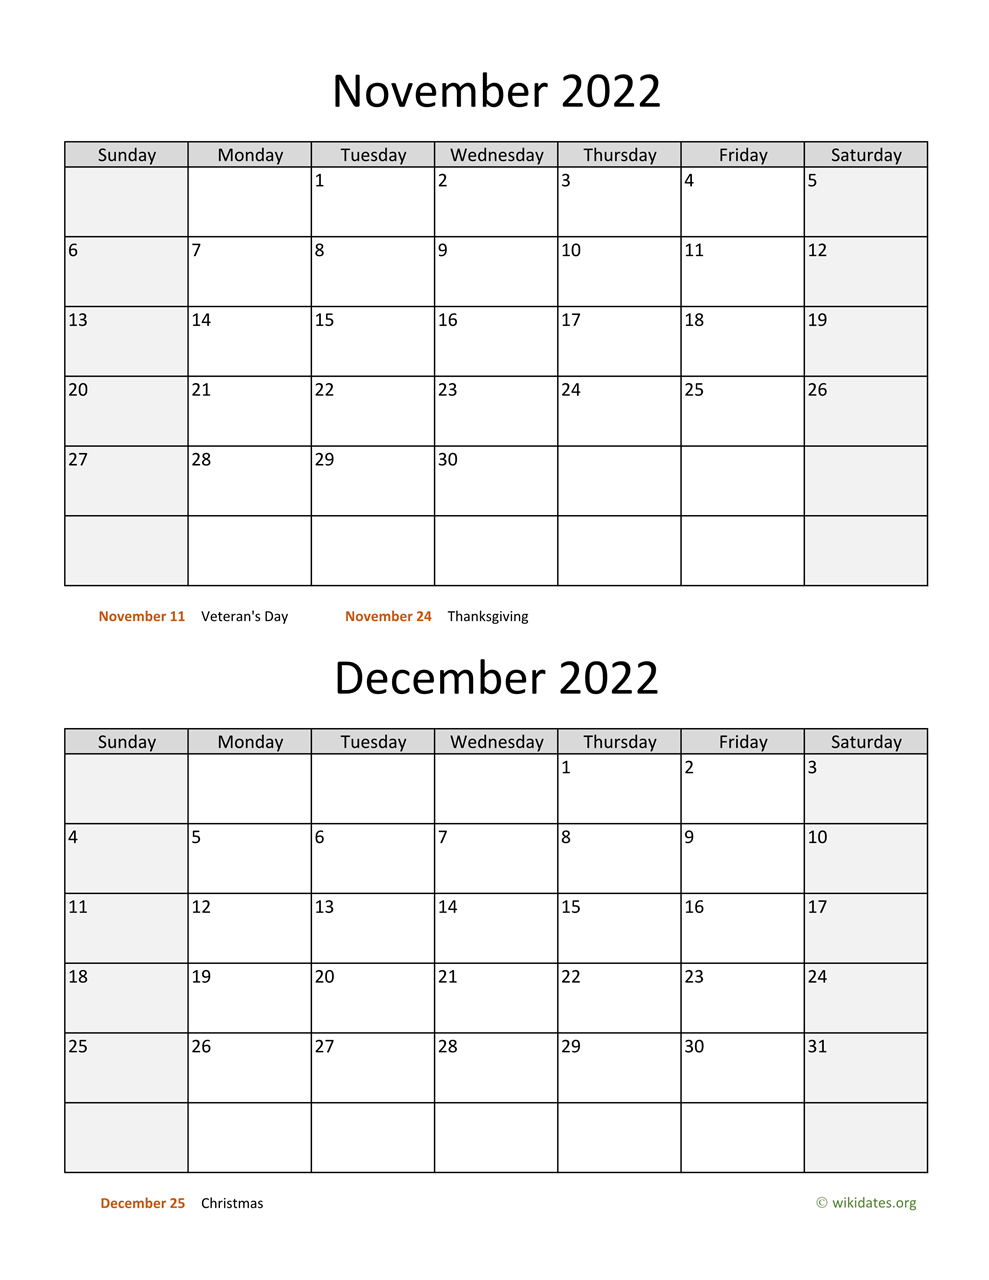 November And December 2022 Calendar November And December 2022 Calendar | Wikidates.org